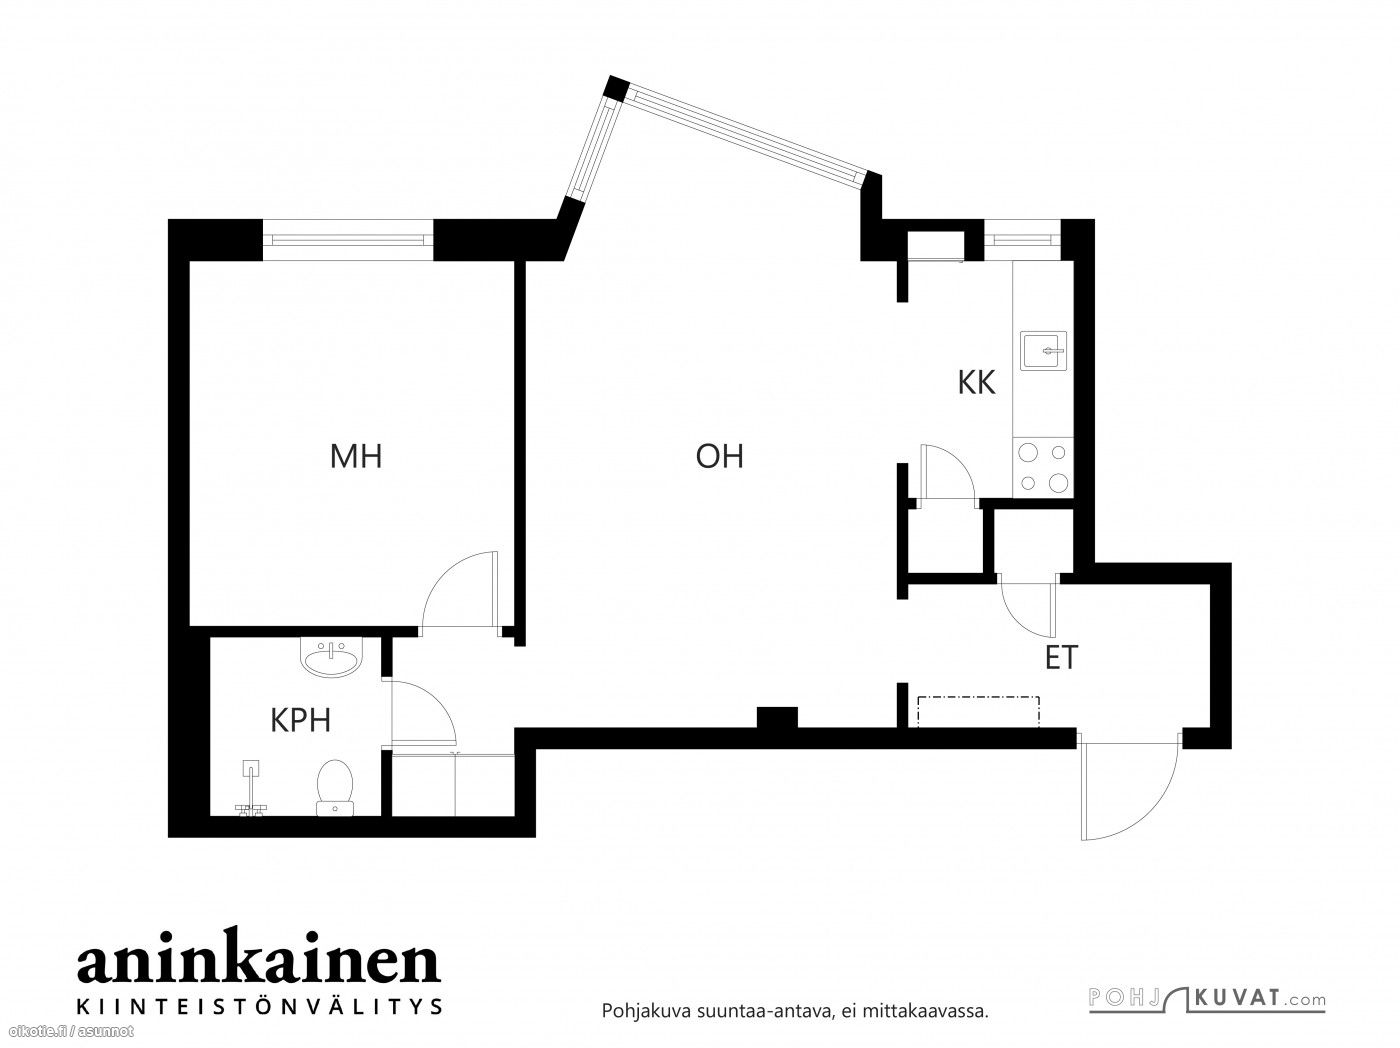 39 m² Läntinen Pitkäkatu 11, 20100 Turku 2h+kk+mh+wc/kph – Oikotie 17110866  – SKVL